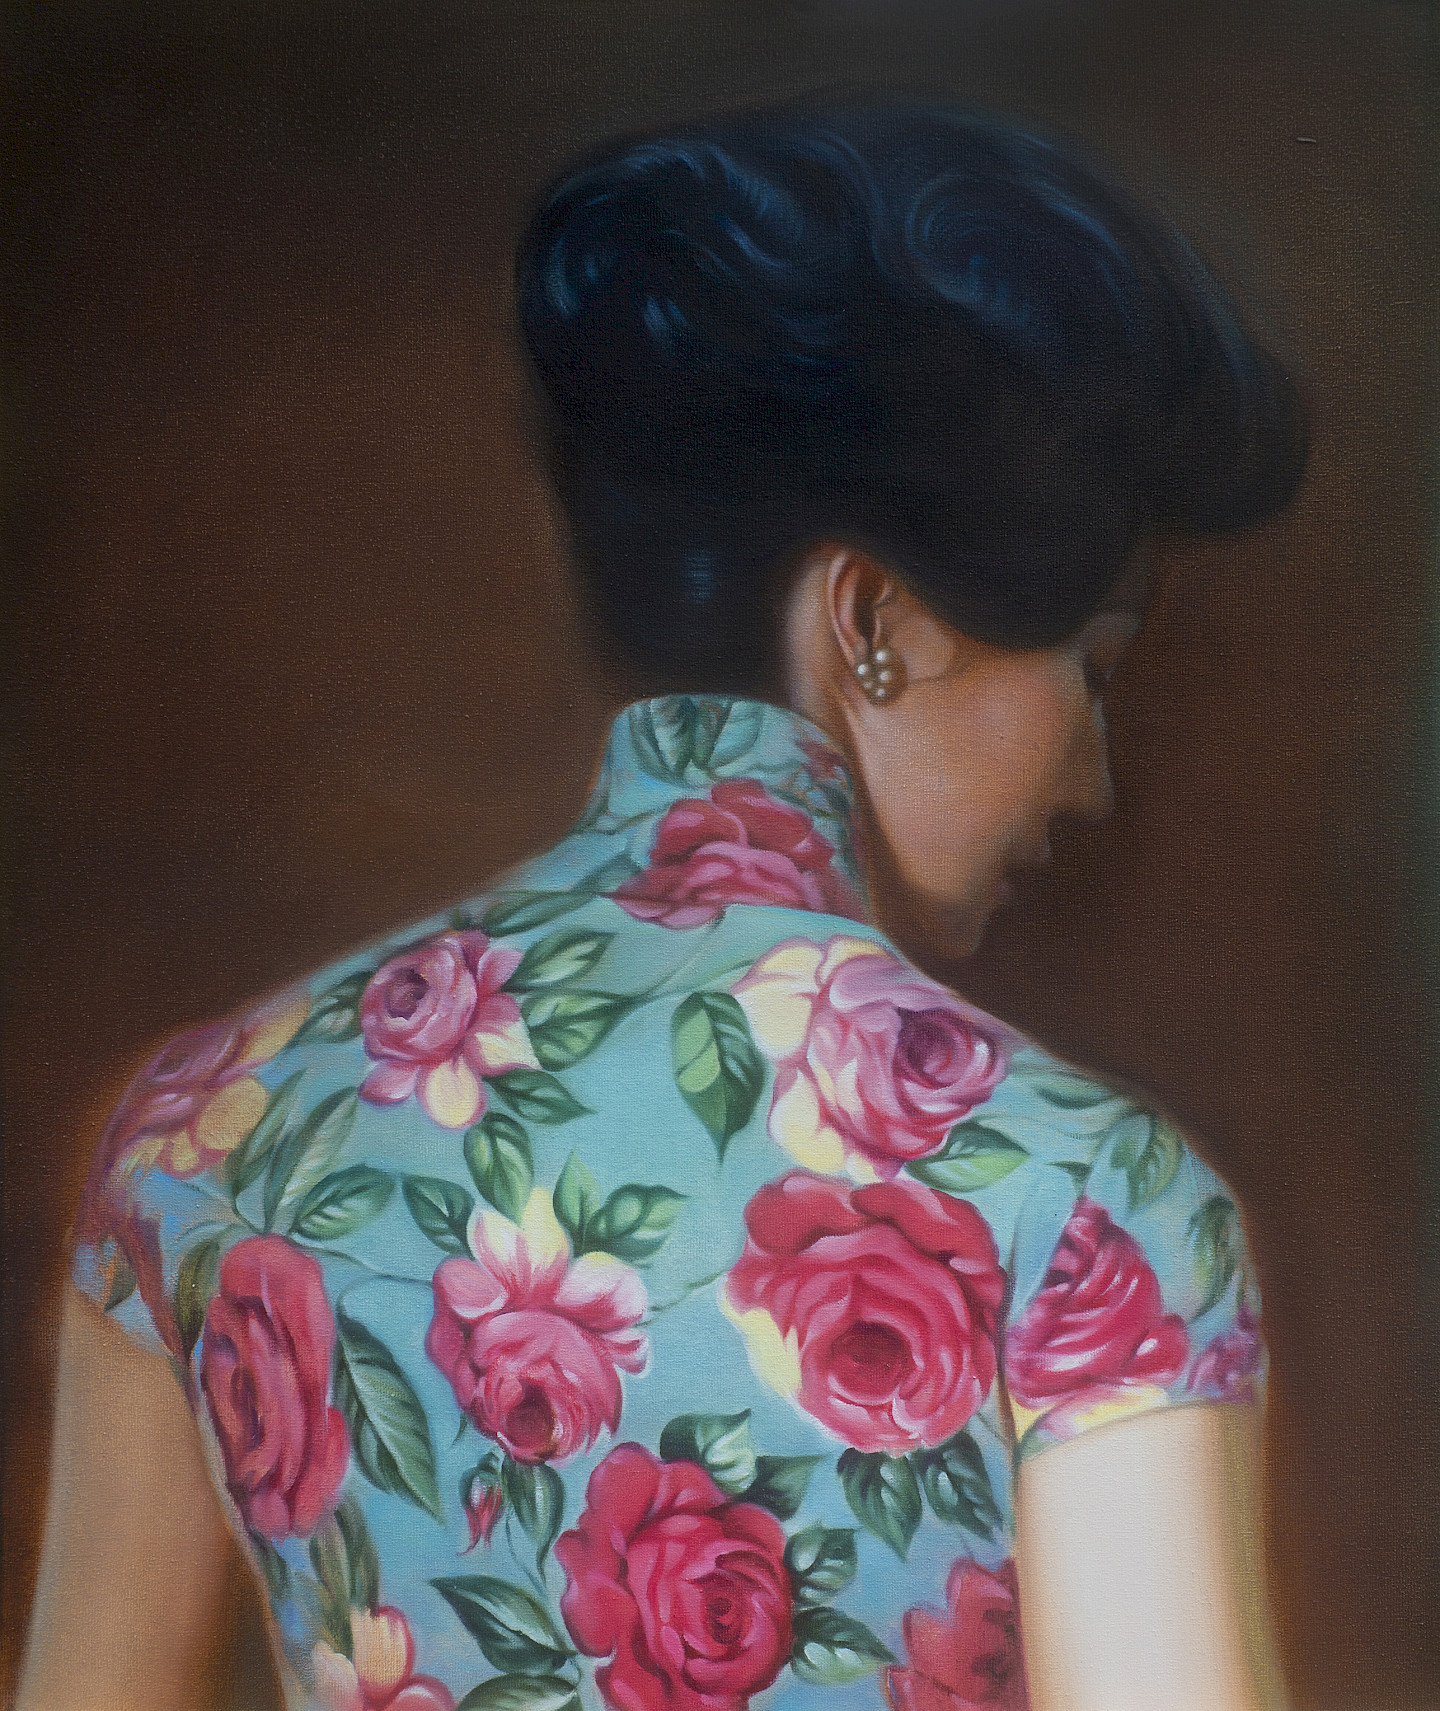 Zhenya Li: IN THE MOOD OF LOVE, 2021, 50 x 60 cm, oil on canvas